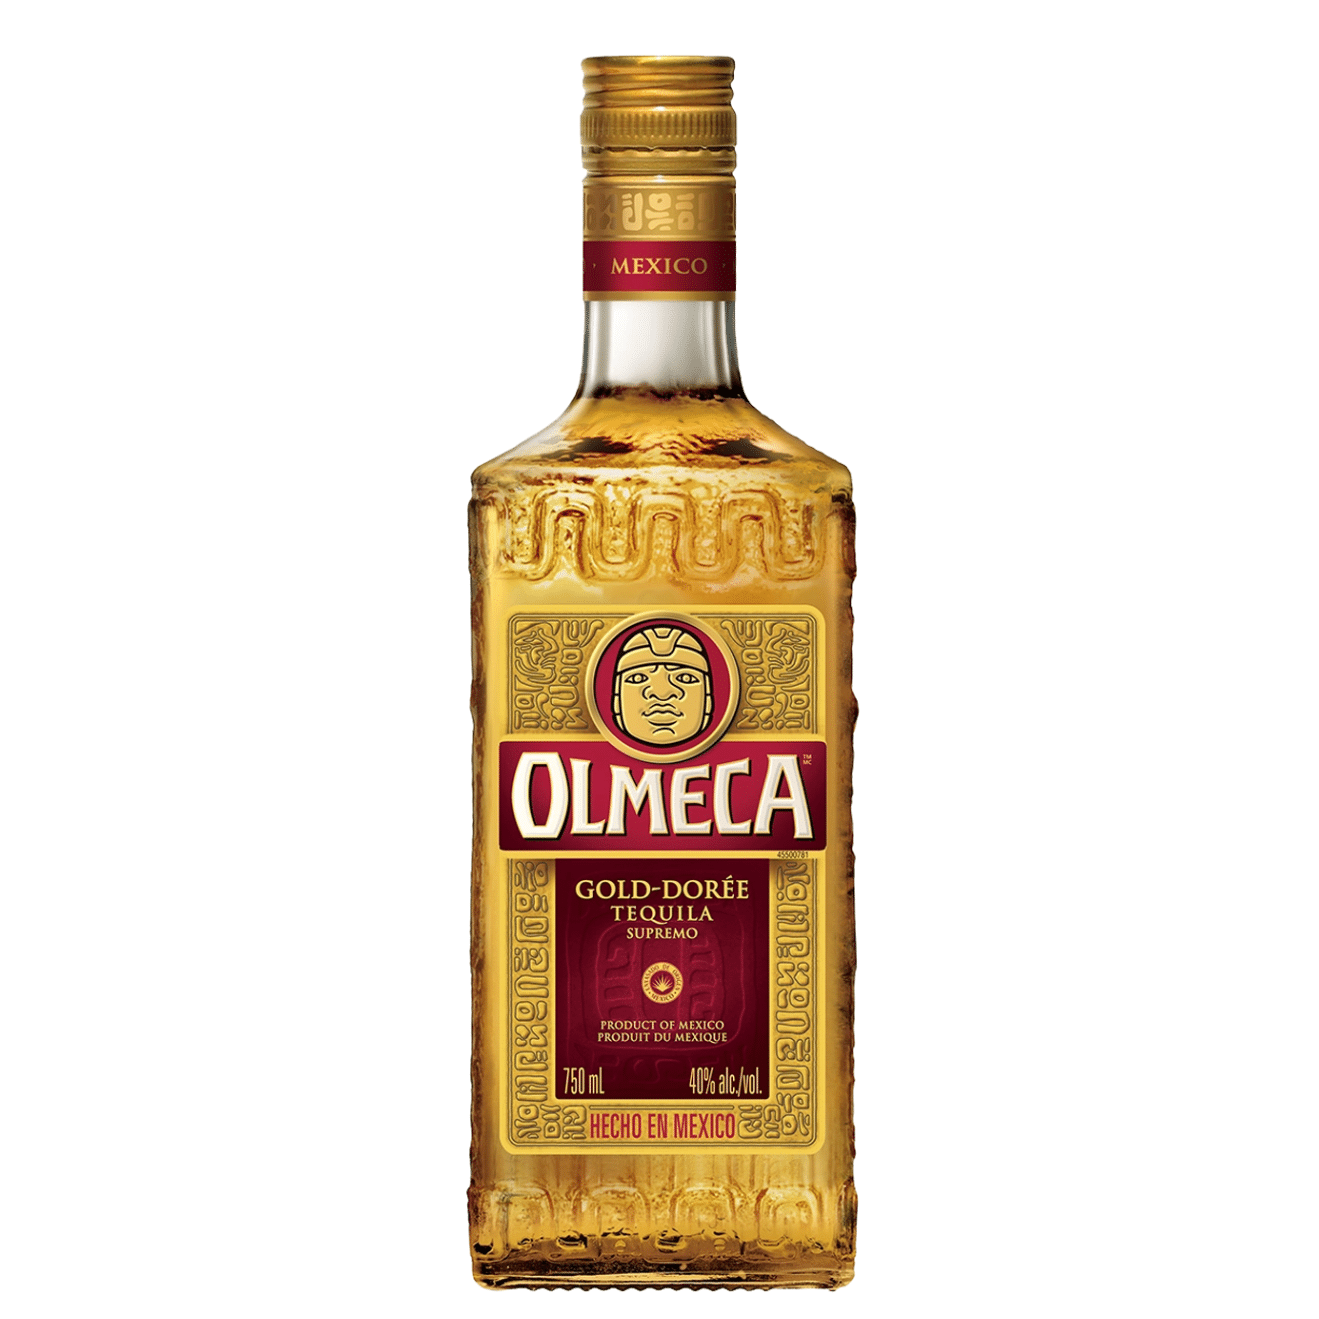 Olmeca Tequila Gold 0,7l